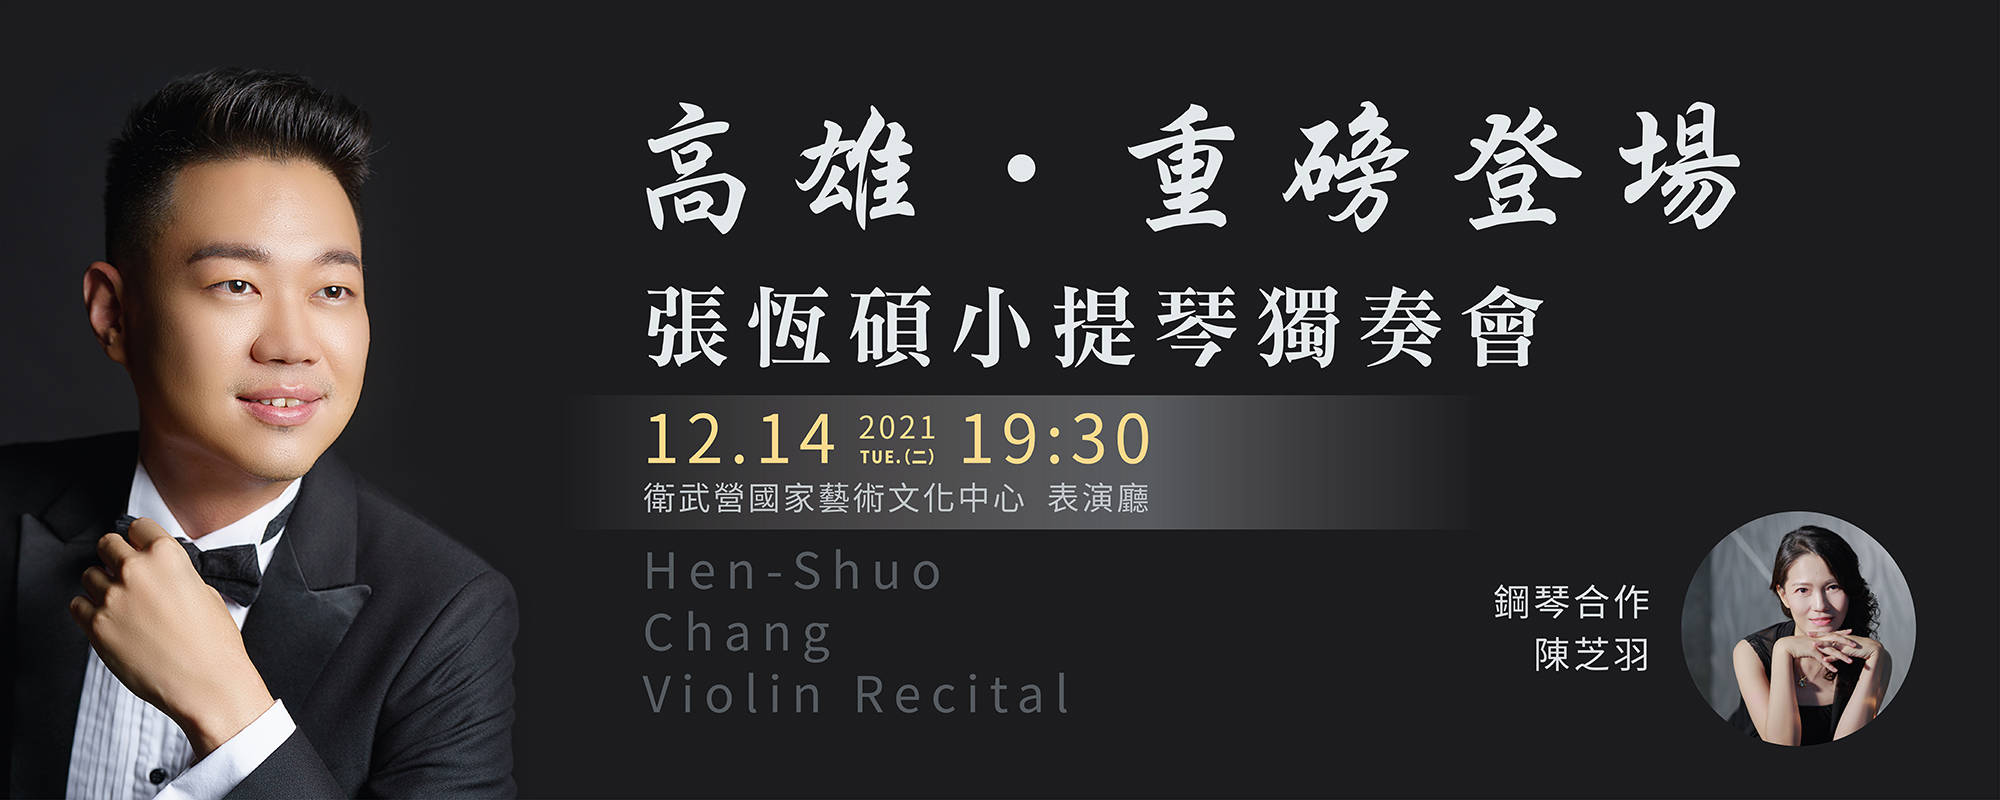 Hen-Shuo Steven Chang Violin Recital